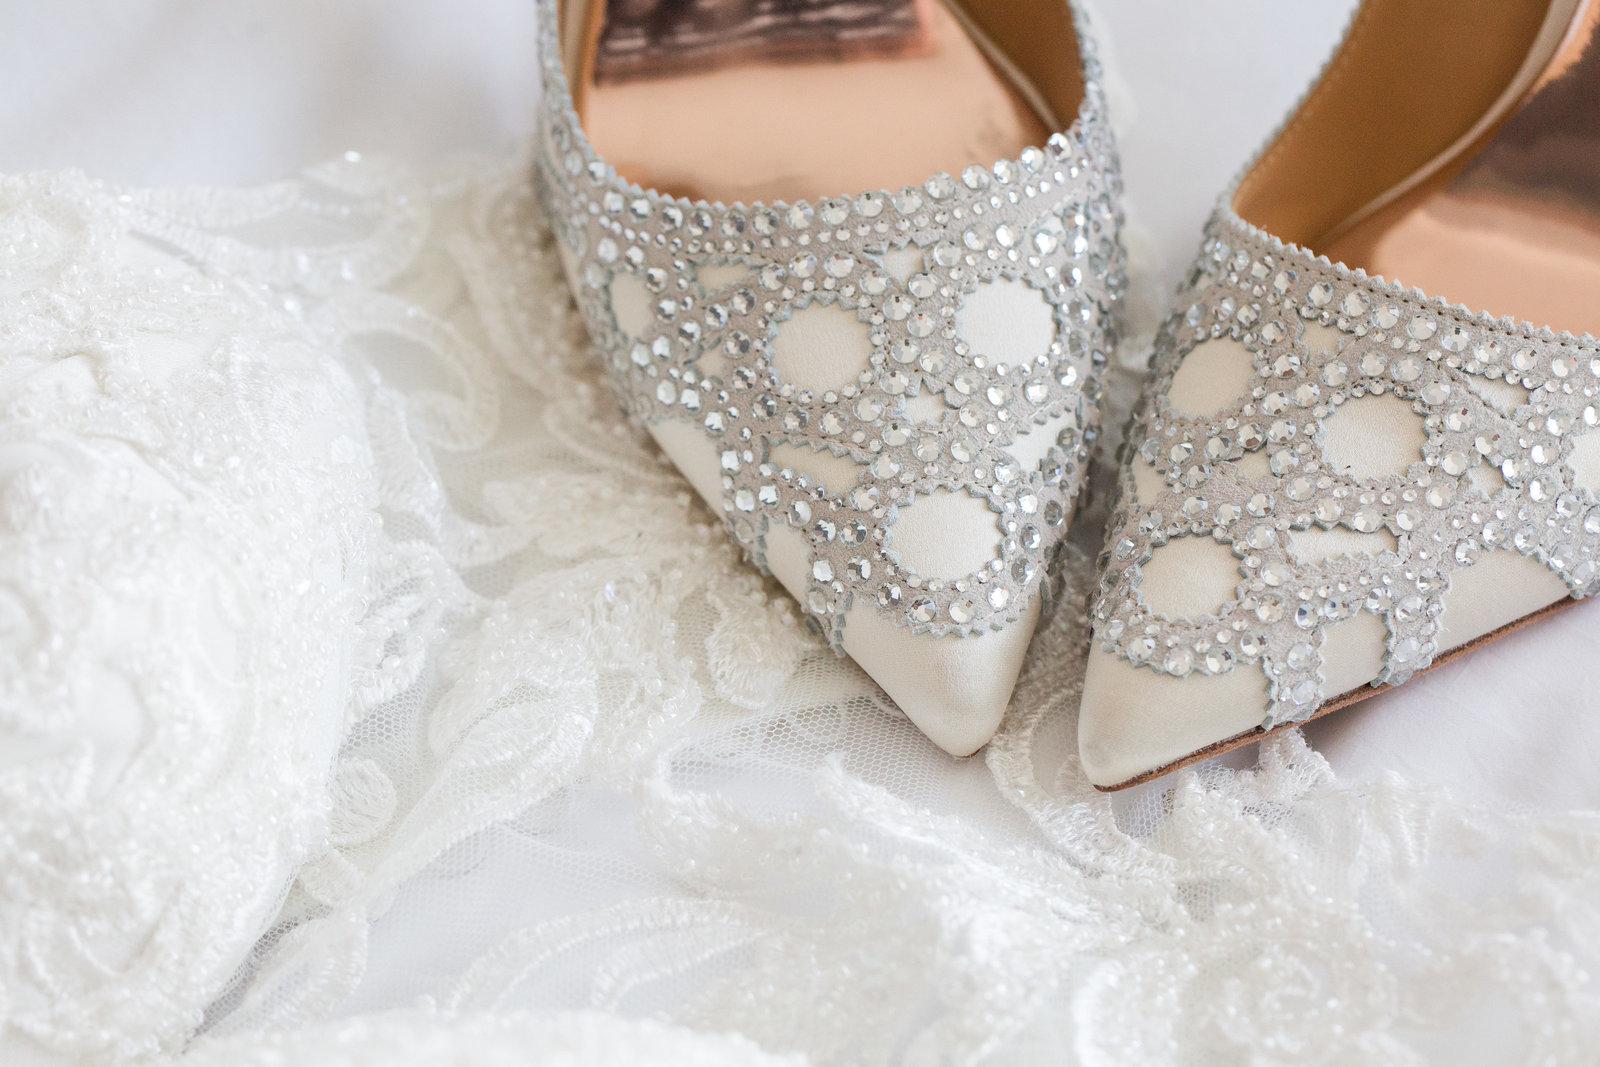 Ottawa Wedding Shoes Beads